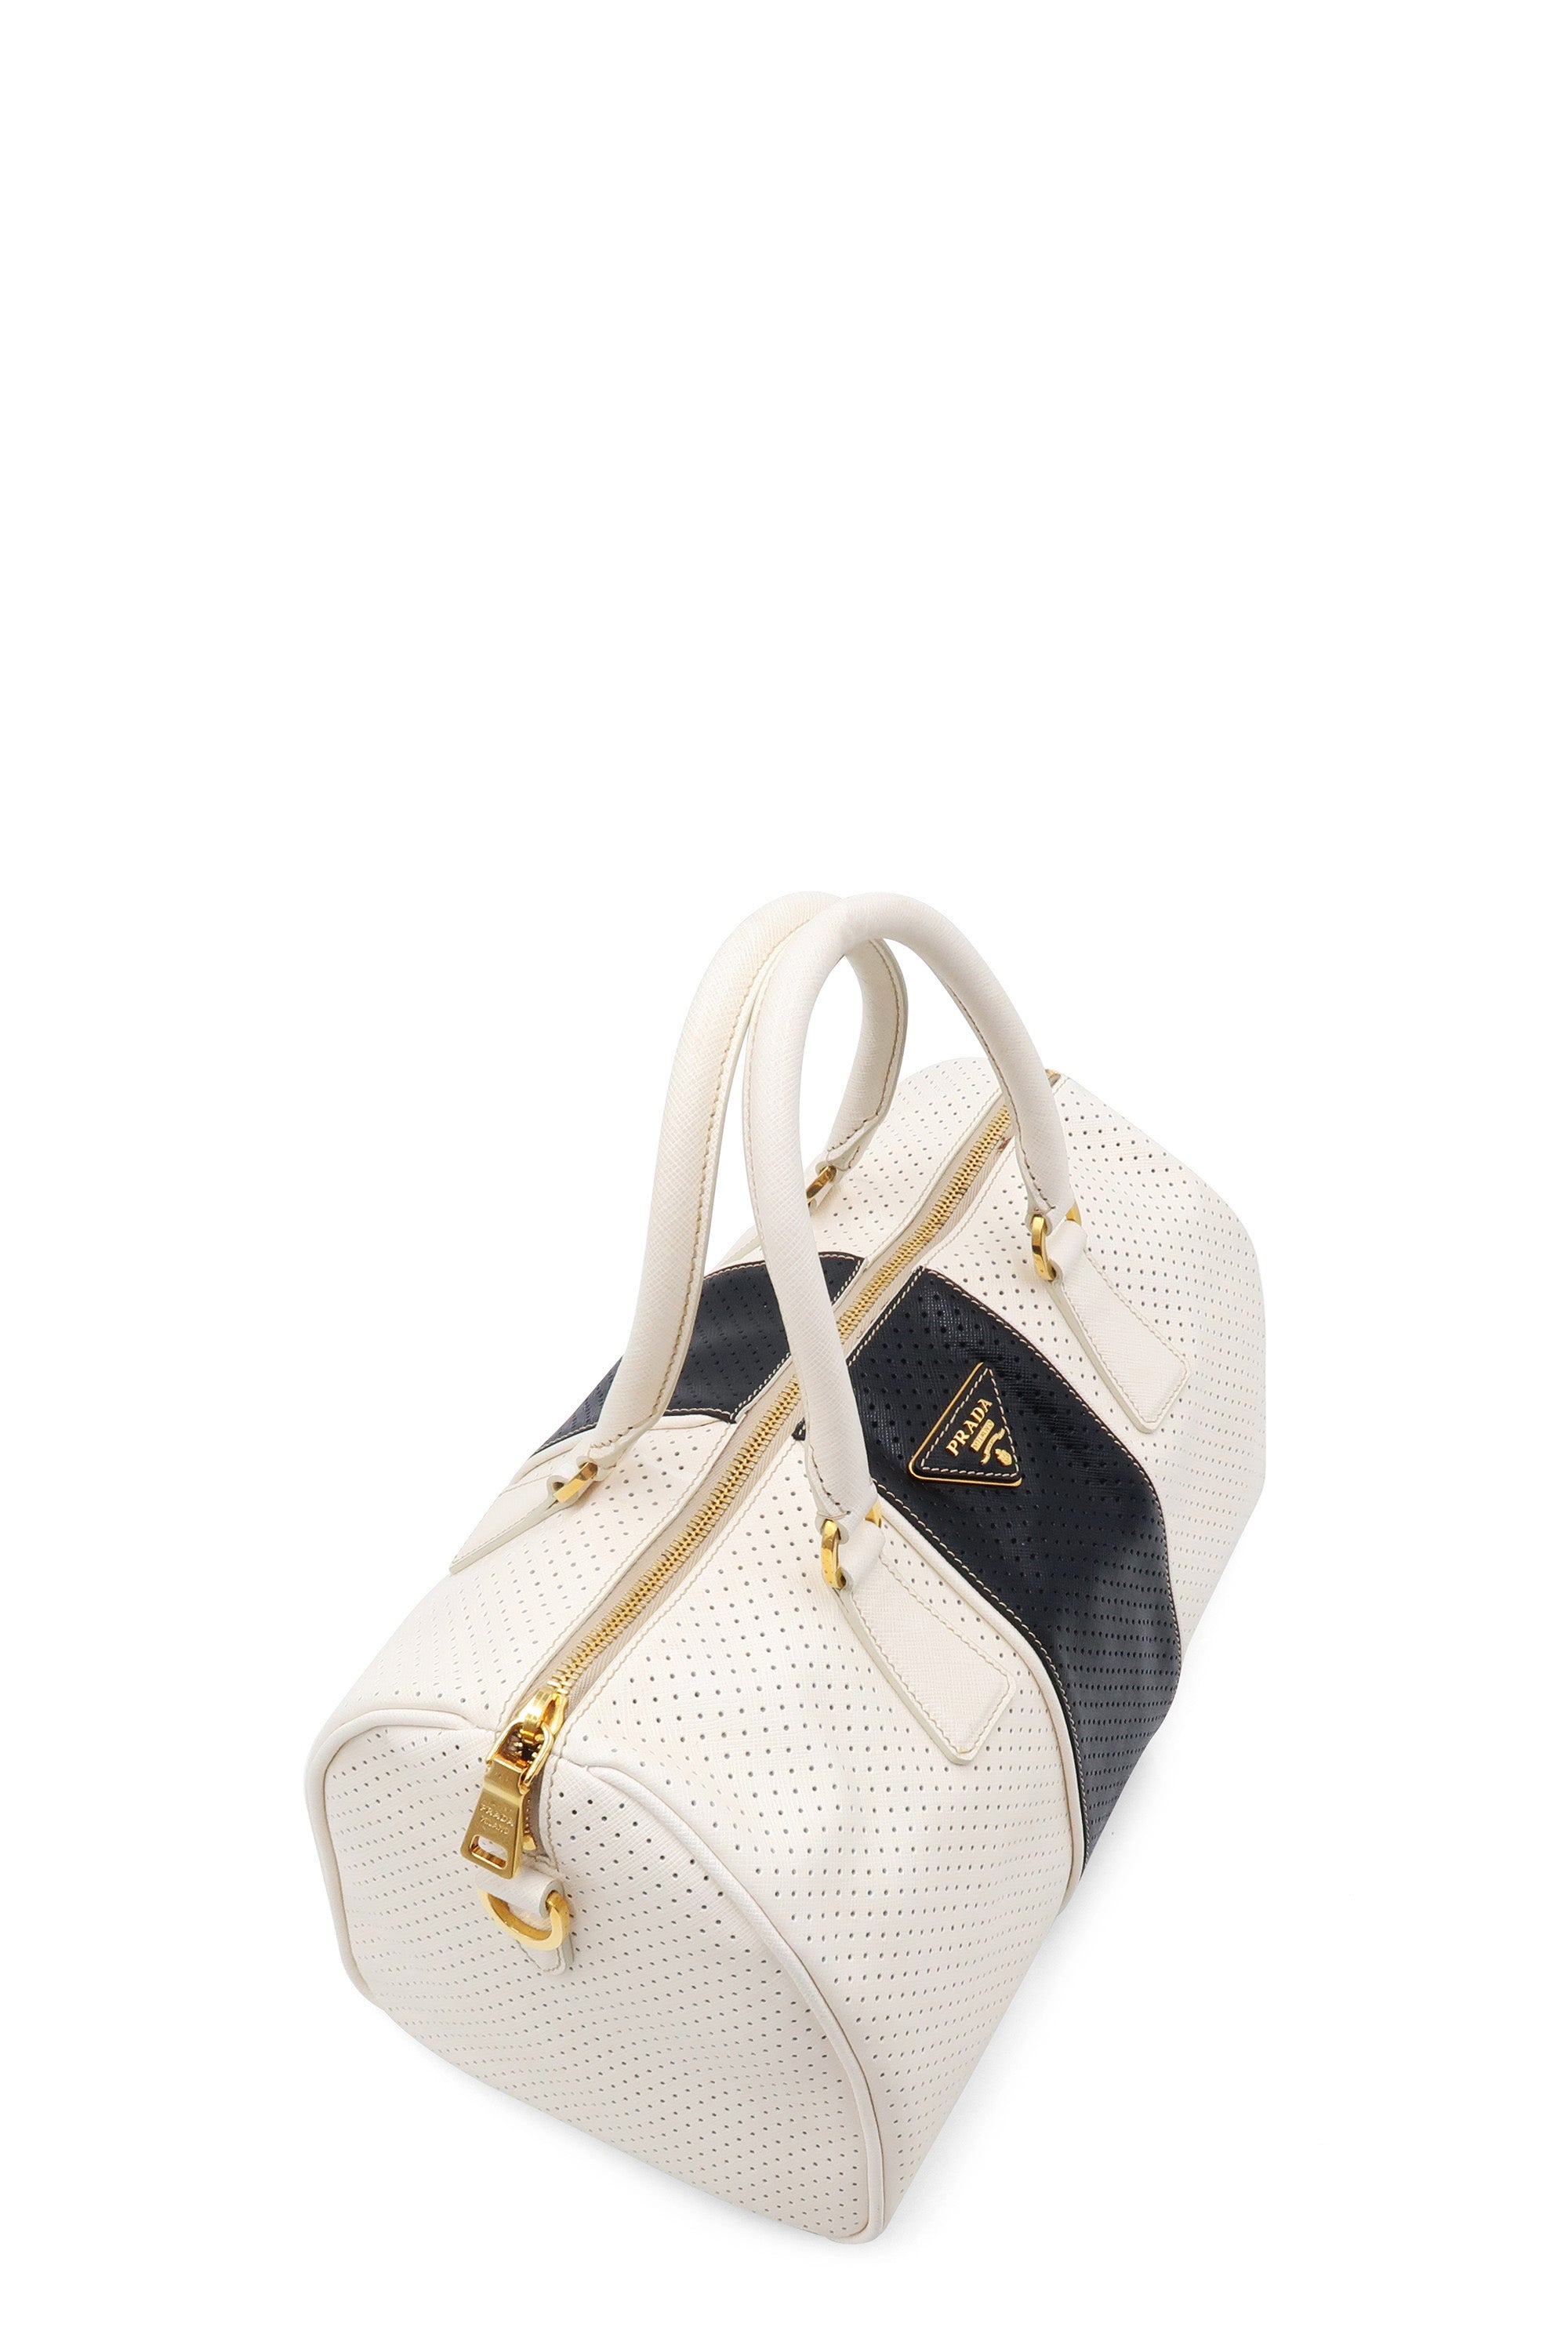 Prada Saffiano Boston Shoulder Bag – Just Gorgeous Studio